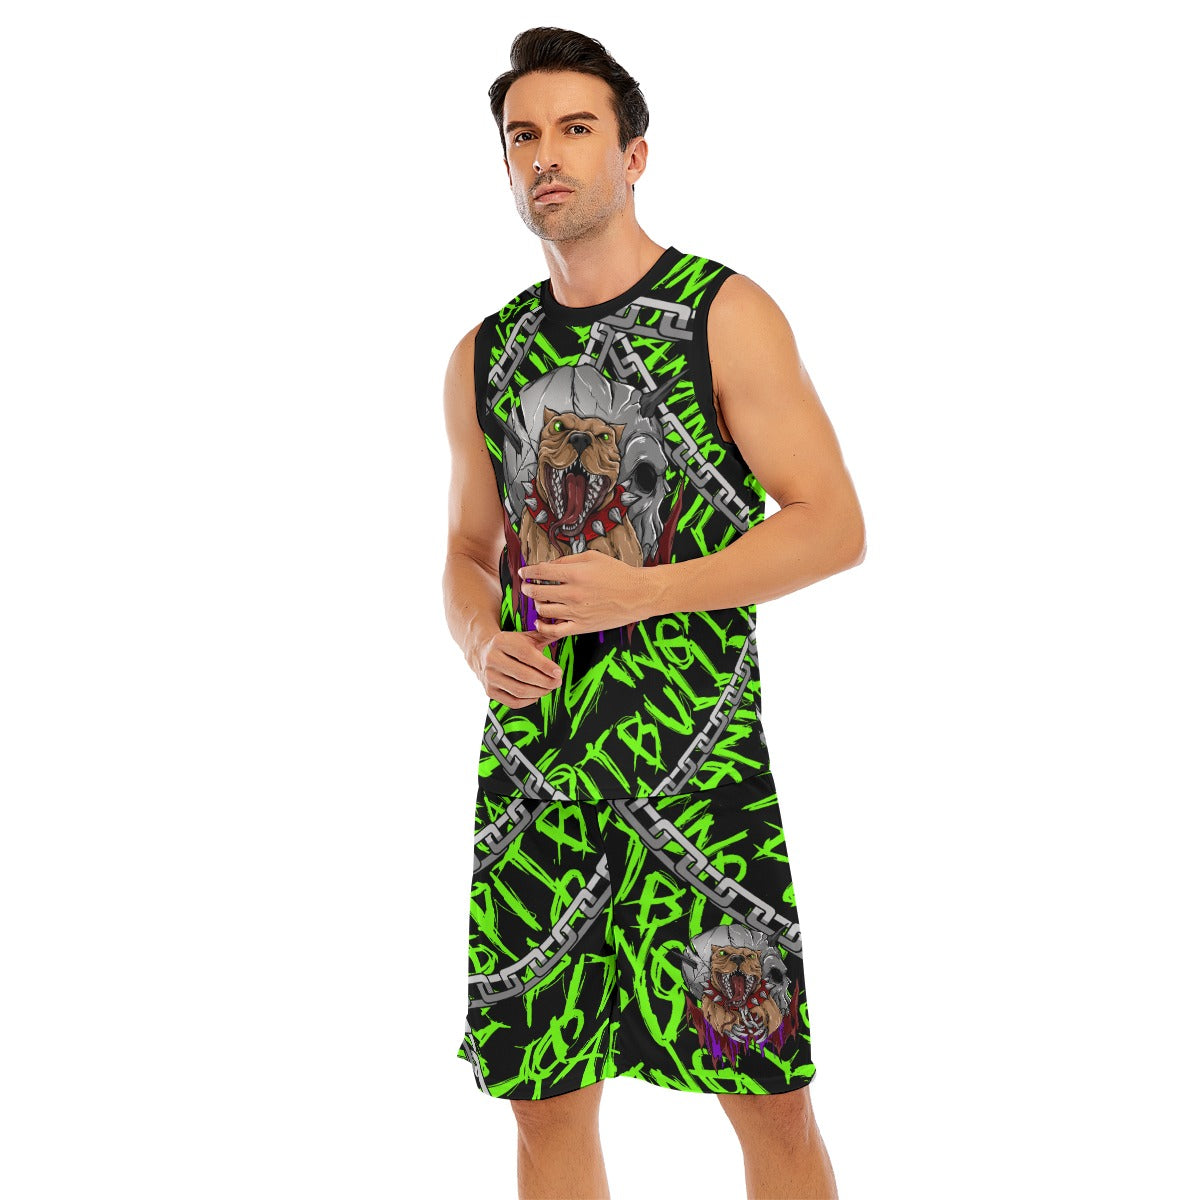 Men's Pitbull Gaming Basketball Suit